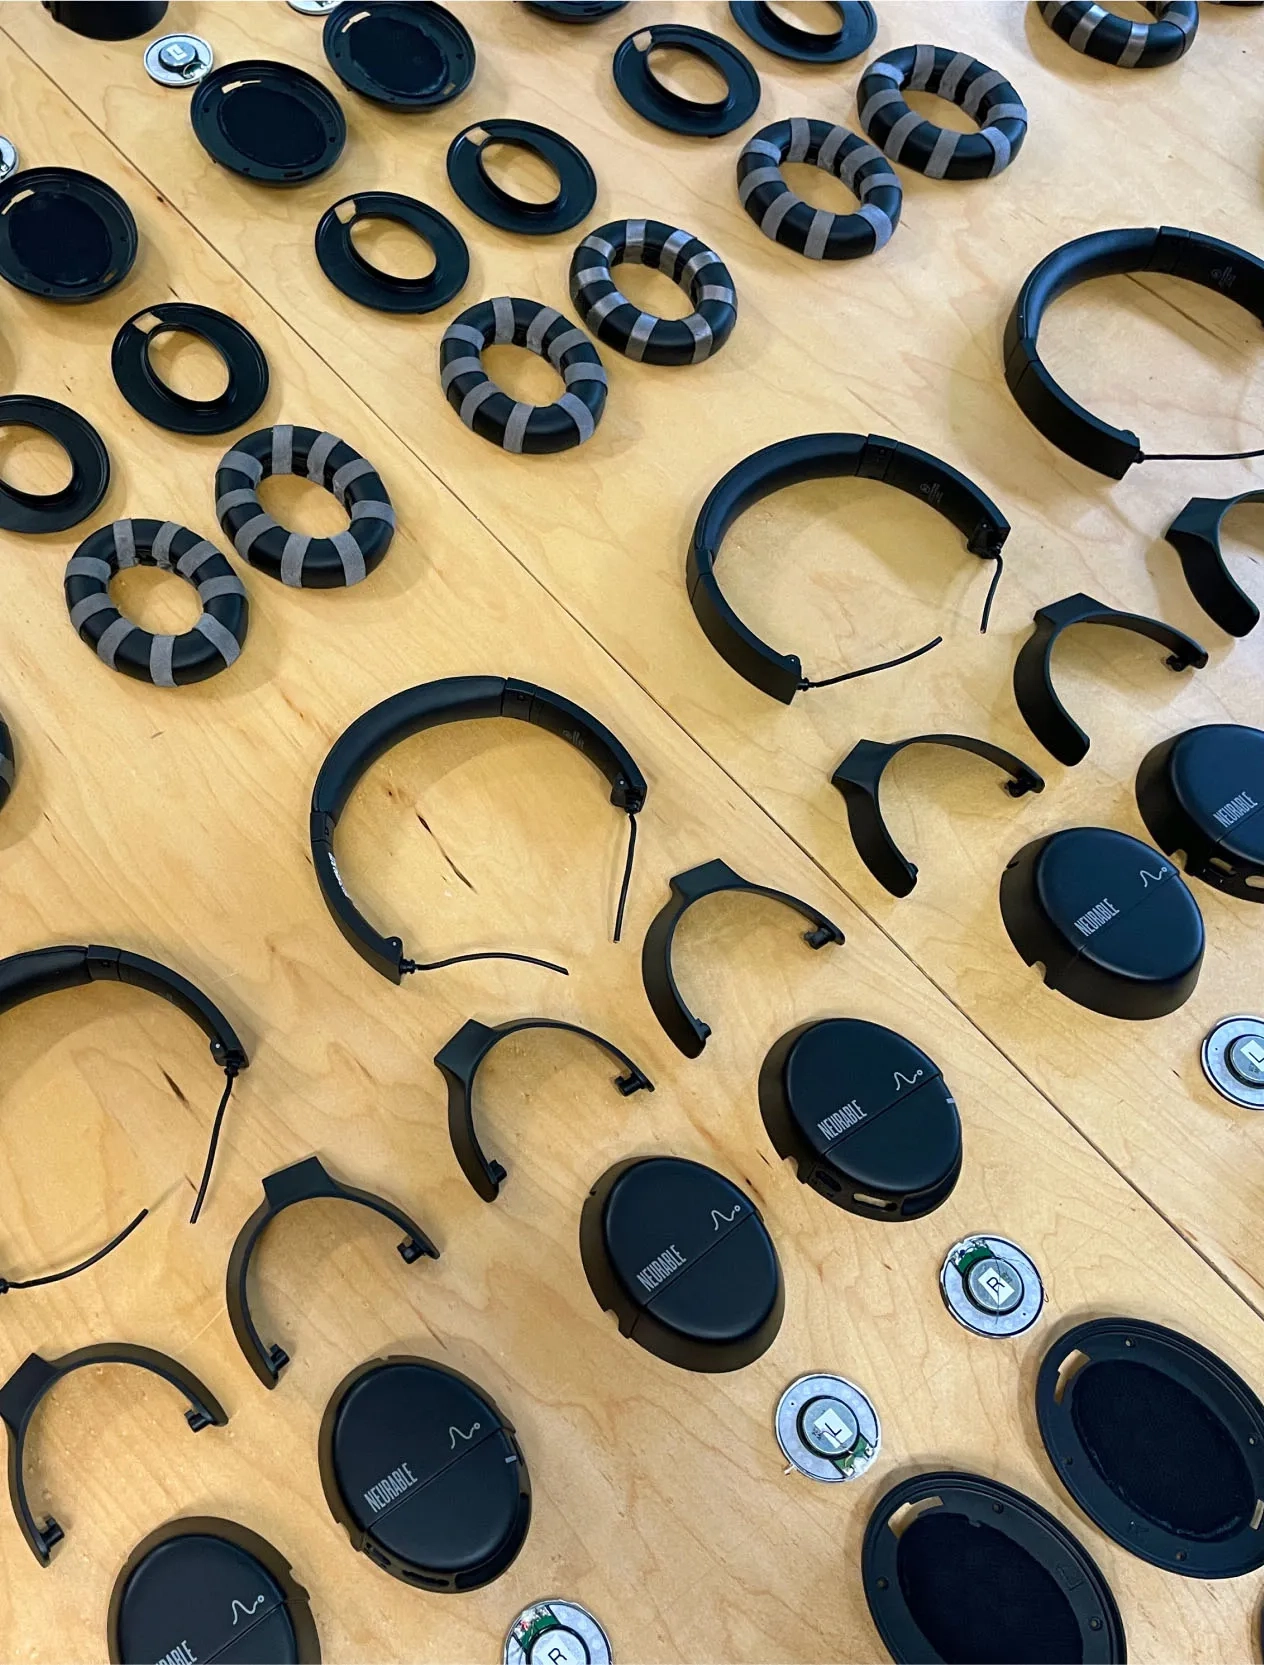 Neurable case study image content headphones components